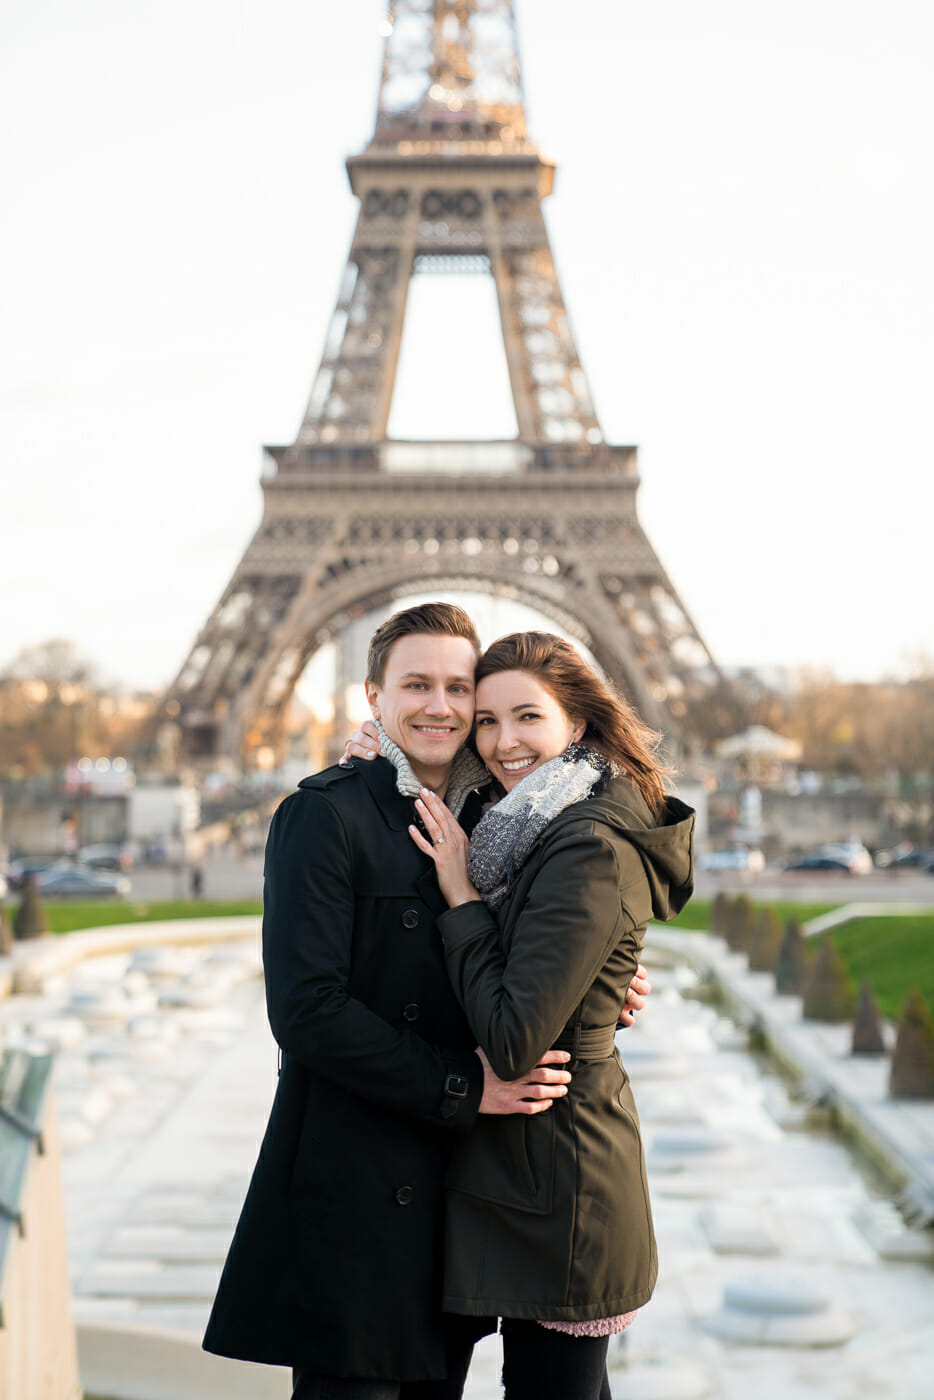 Paris Eiffel Tower photoshoot at the Trocadero Fountains